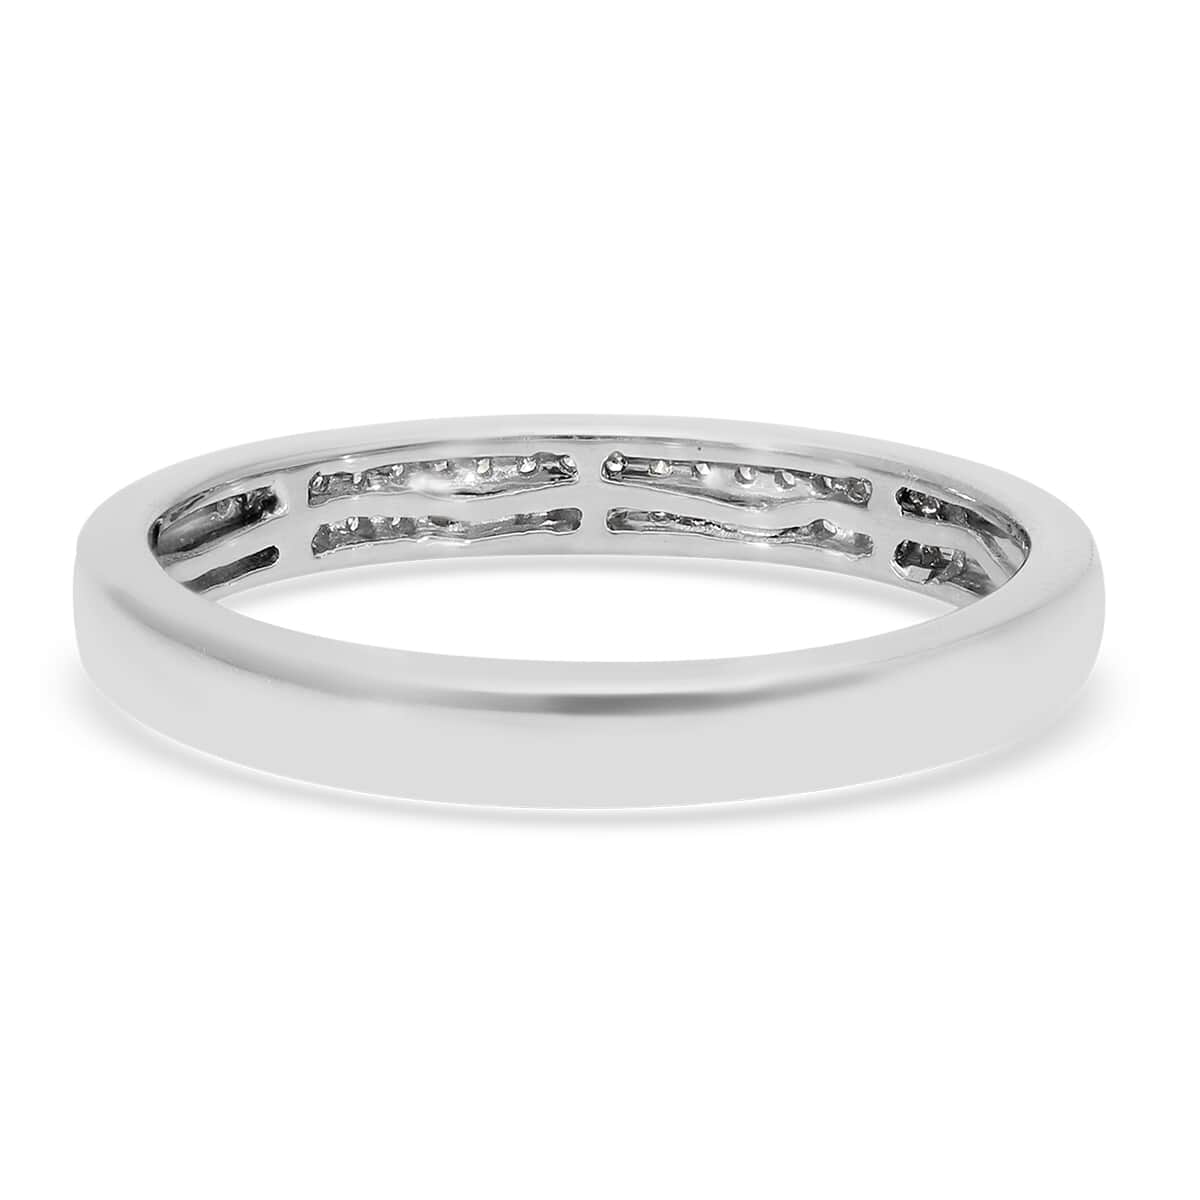 RHAPSODY IGI Certified 950 Platinum E-F VS Diamond Ring (Size 6.0) 5 Grams 0.18 ctw image number 4